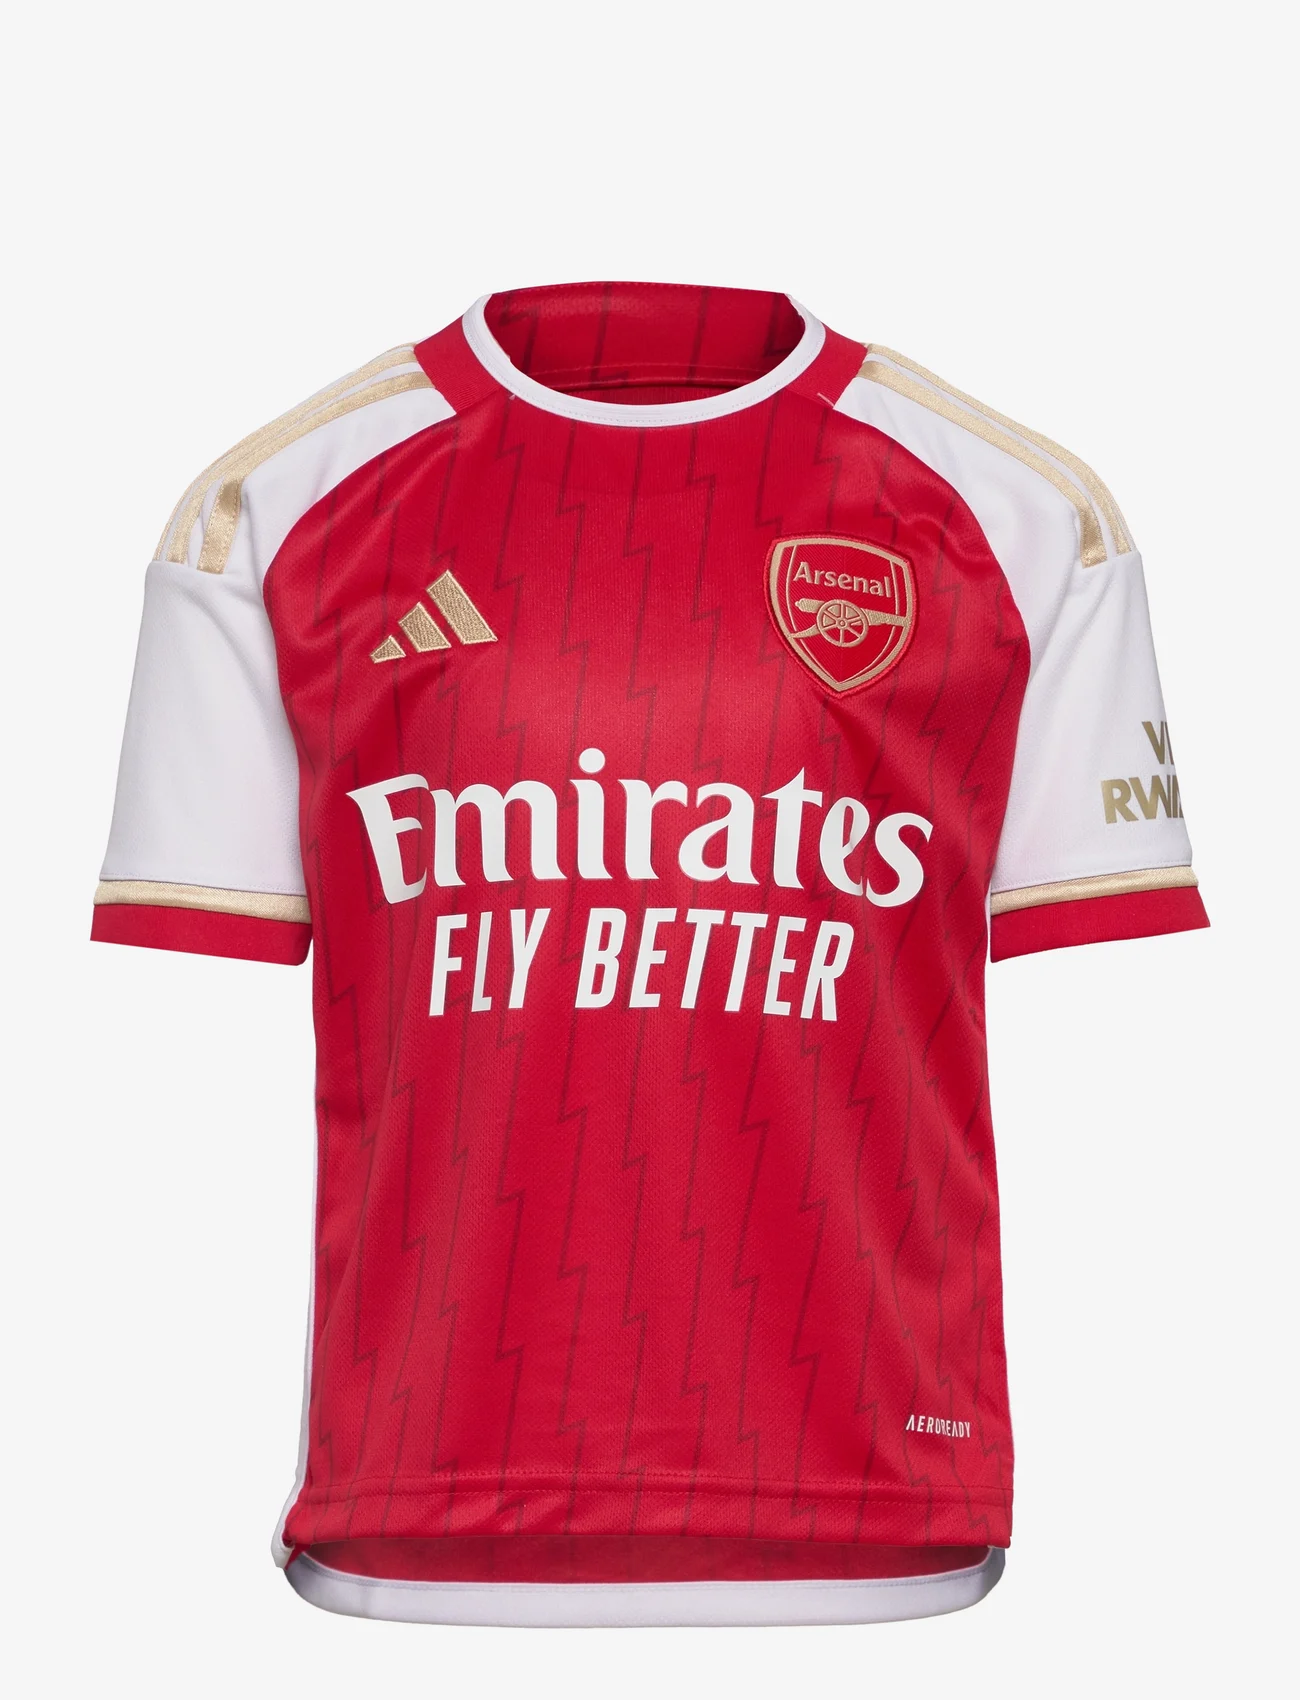 adidas Performance - Arsenal 23/24 Home Jersey - fotbollströjor - betsca/white - 0